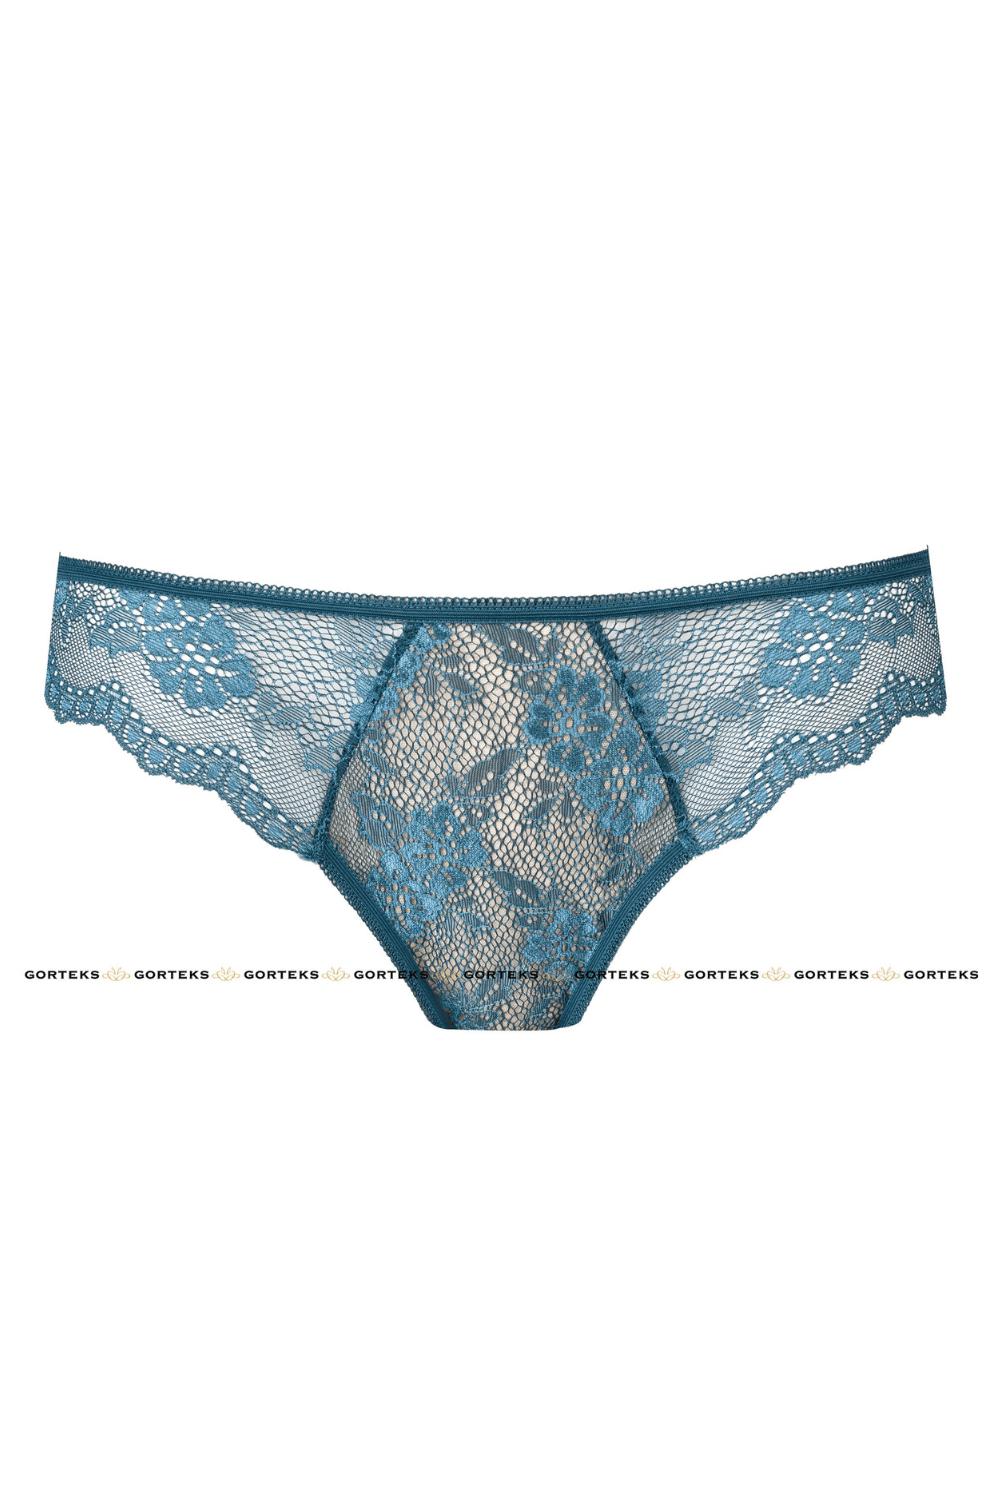 Sea Blue Lace Thong-Gorteks-Rebel Romance